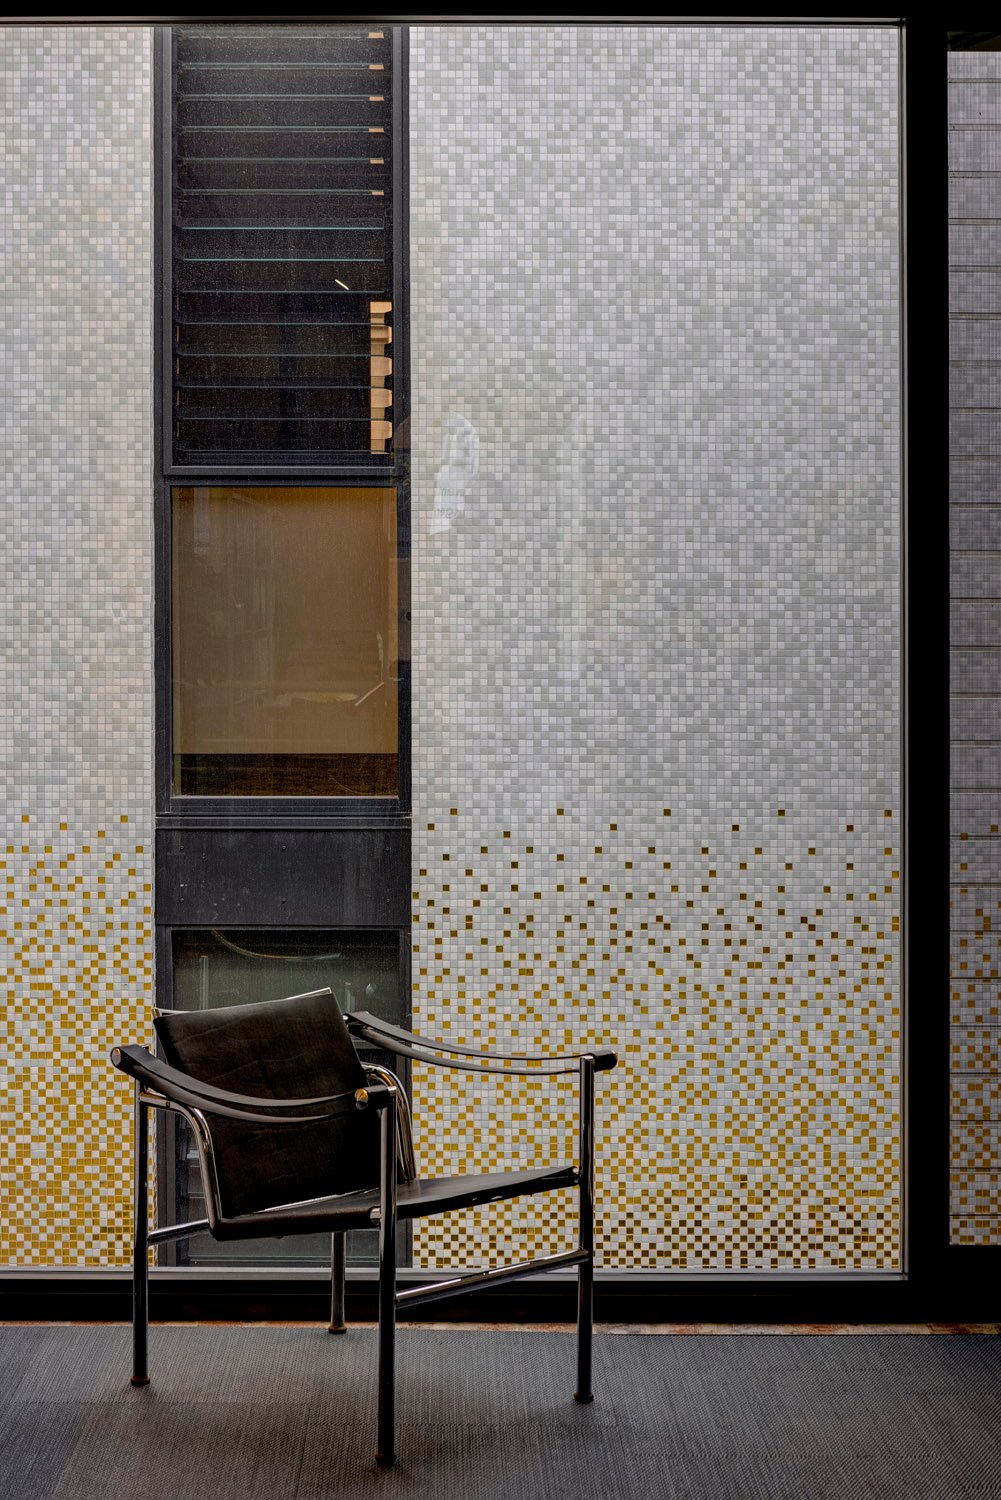 Office with golden facade behind | Brett Boardman